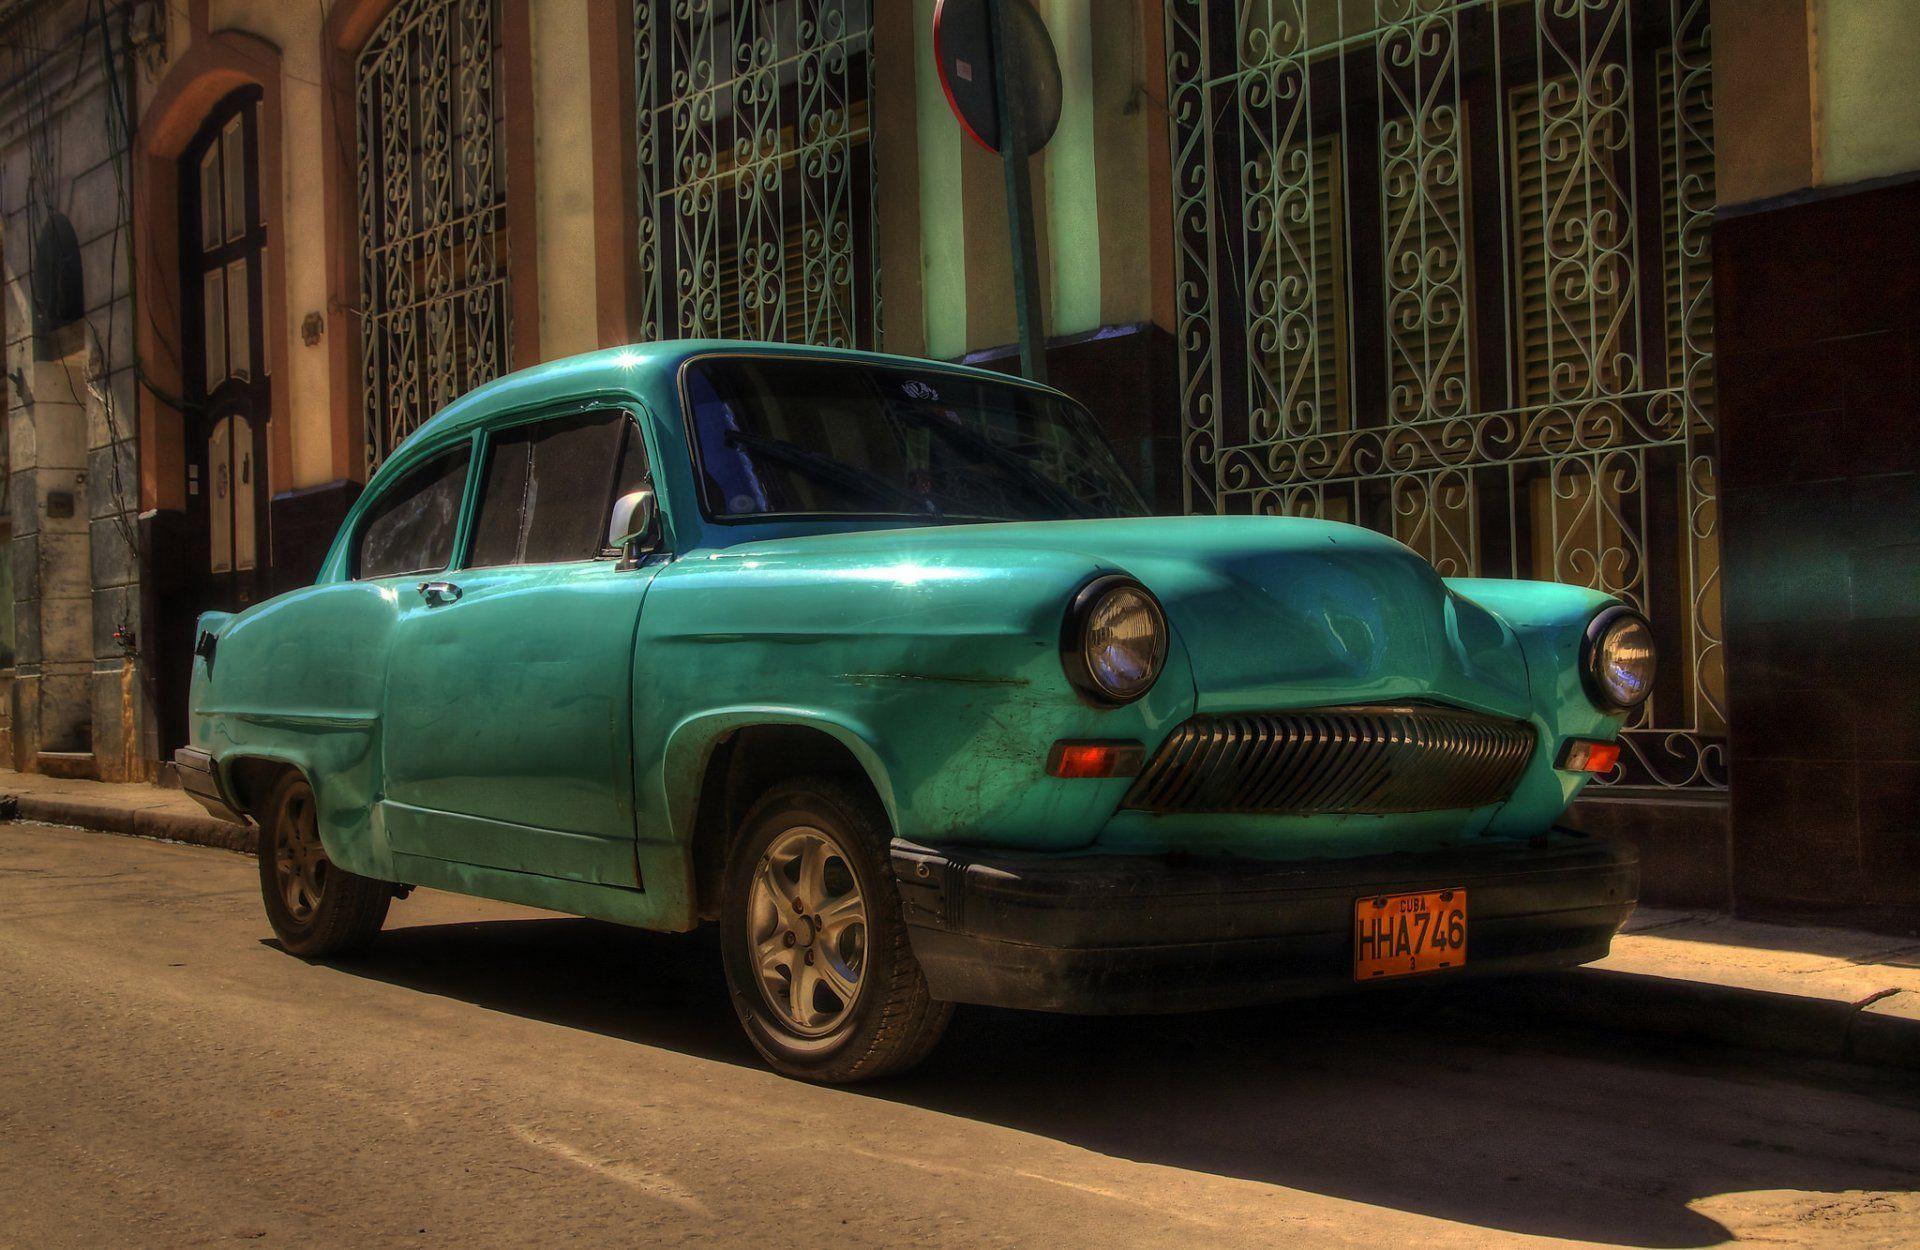 vehicles retro street cuba havana HD wallpaper